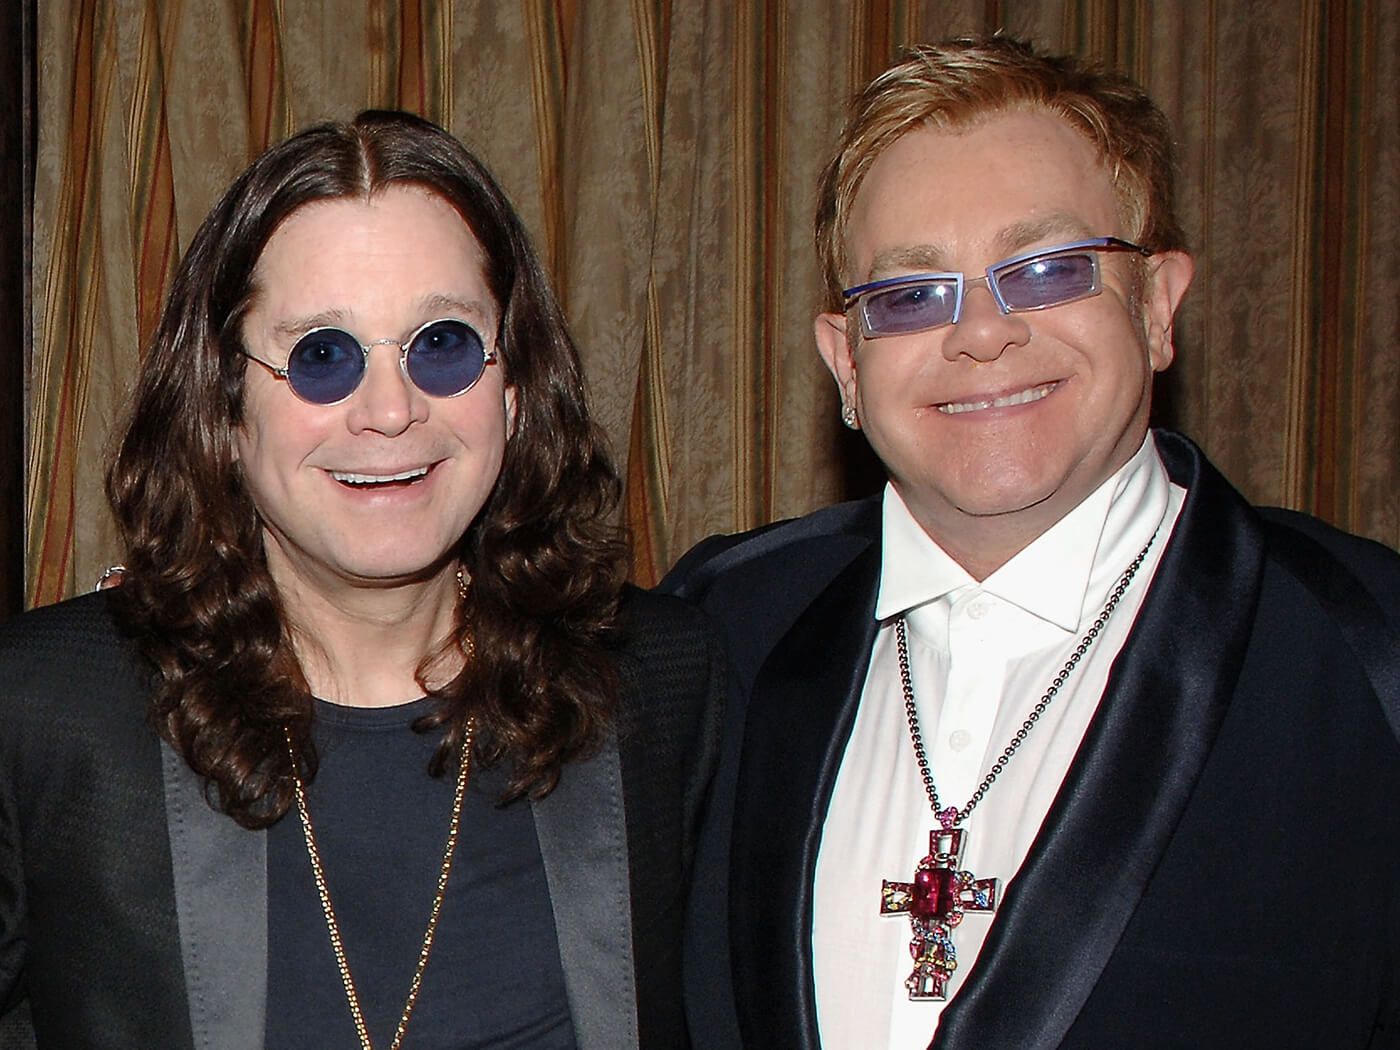 Hear Ozzy Osbourne duet with Elton John